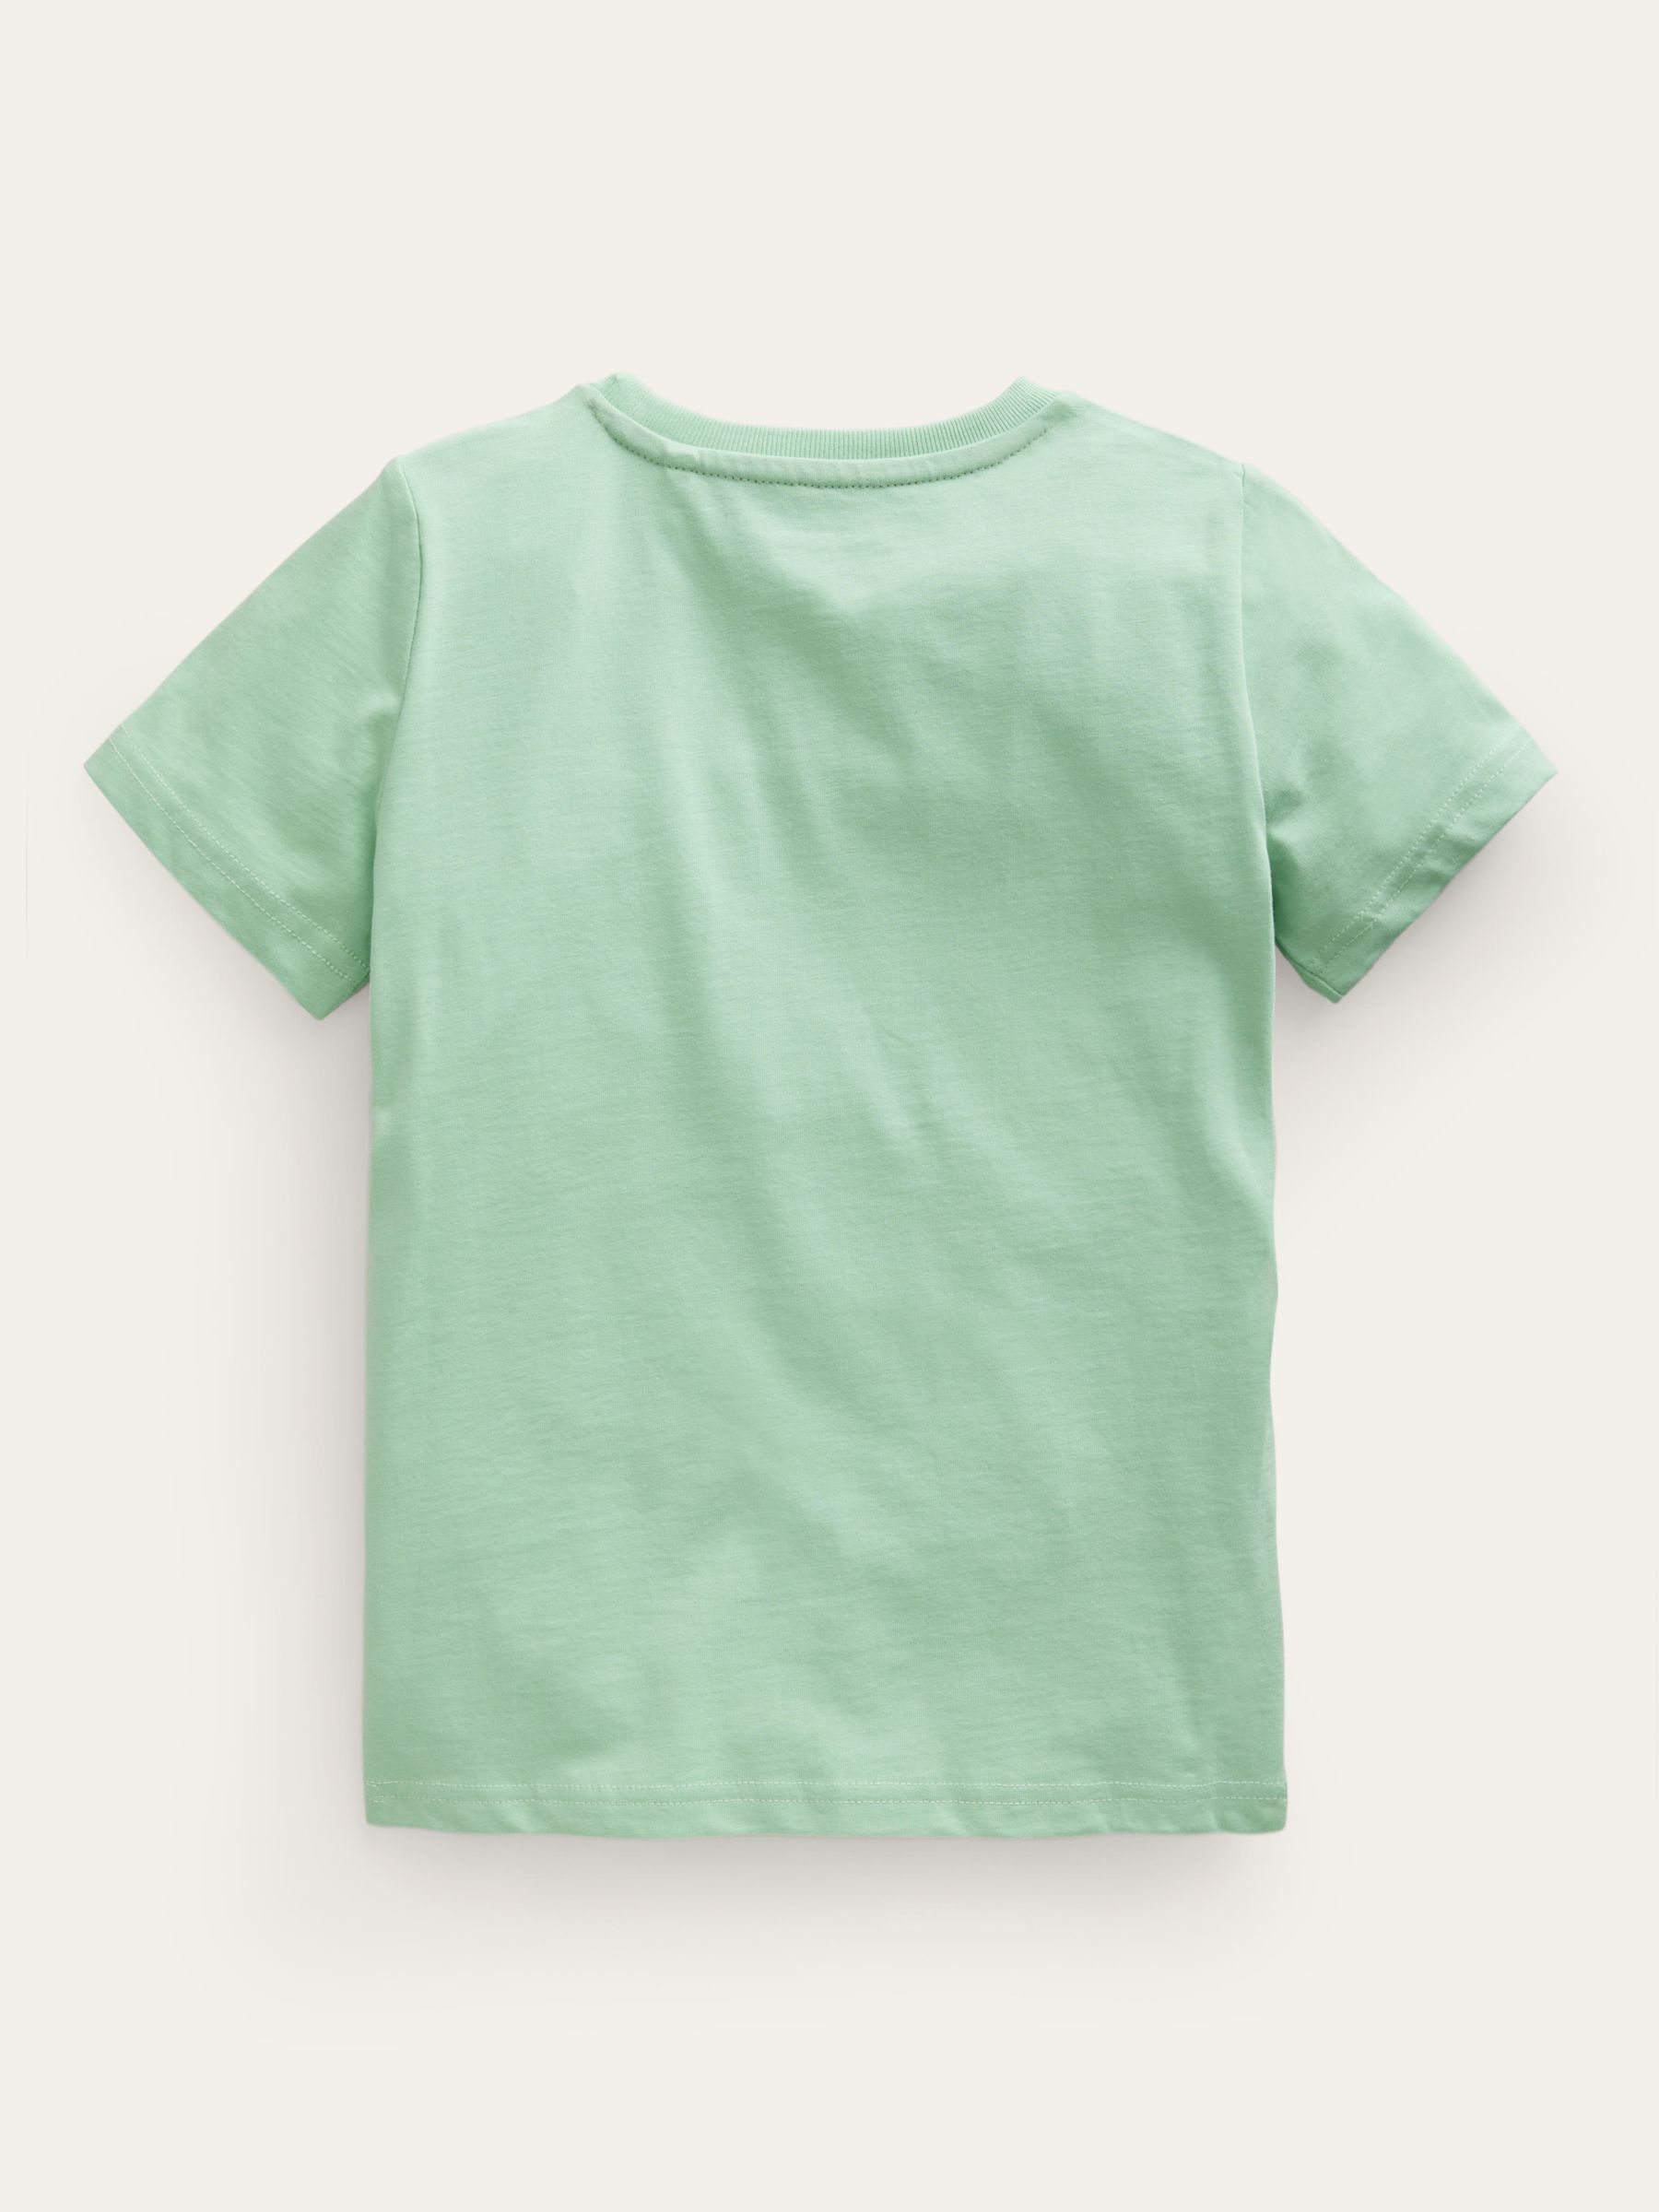 Mini Boden Kids' Riso Dinosaur Printed T-Shirt, Pistachio/Multi, 2-3 years